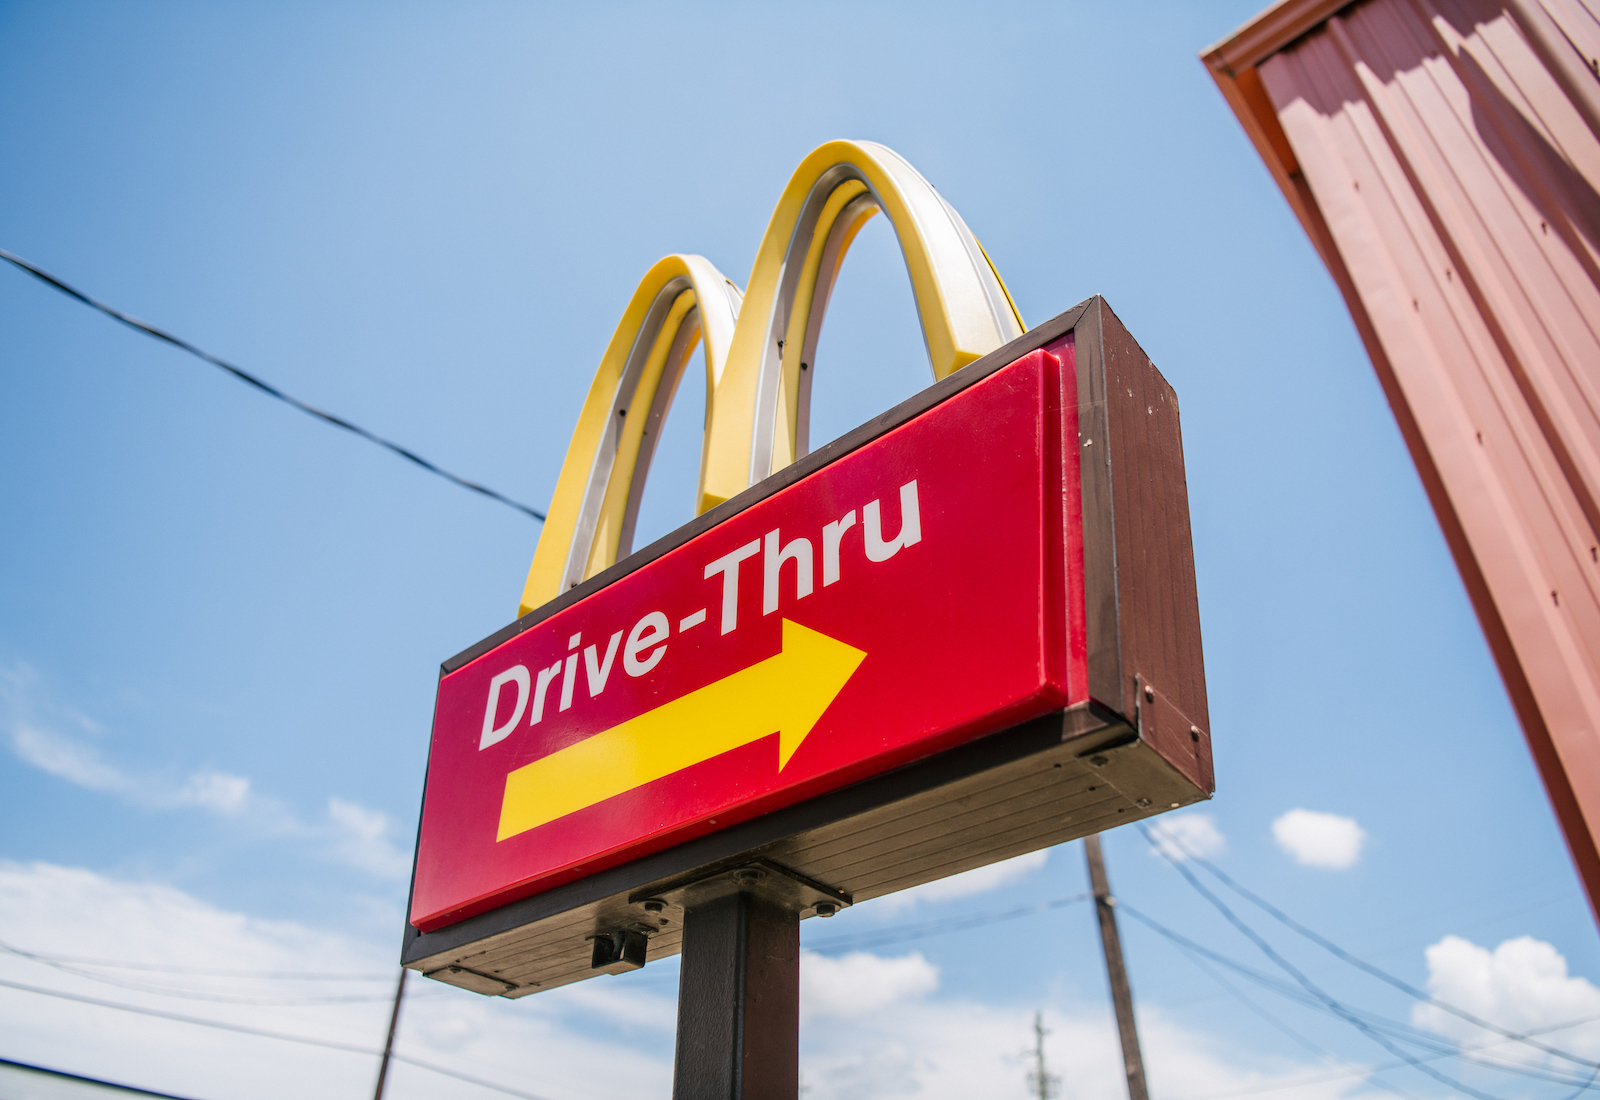 The McDonald's golden arches